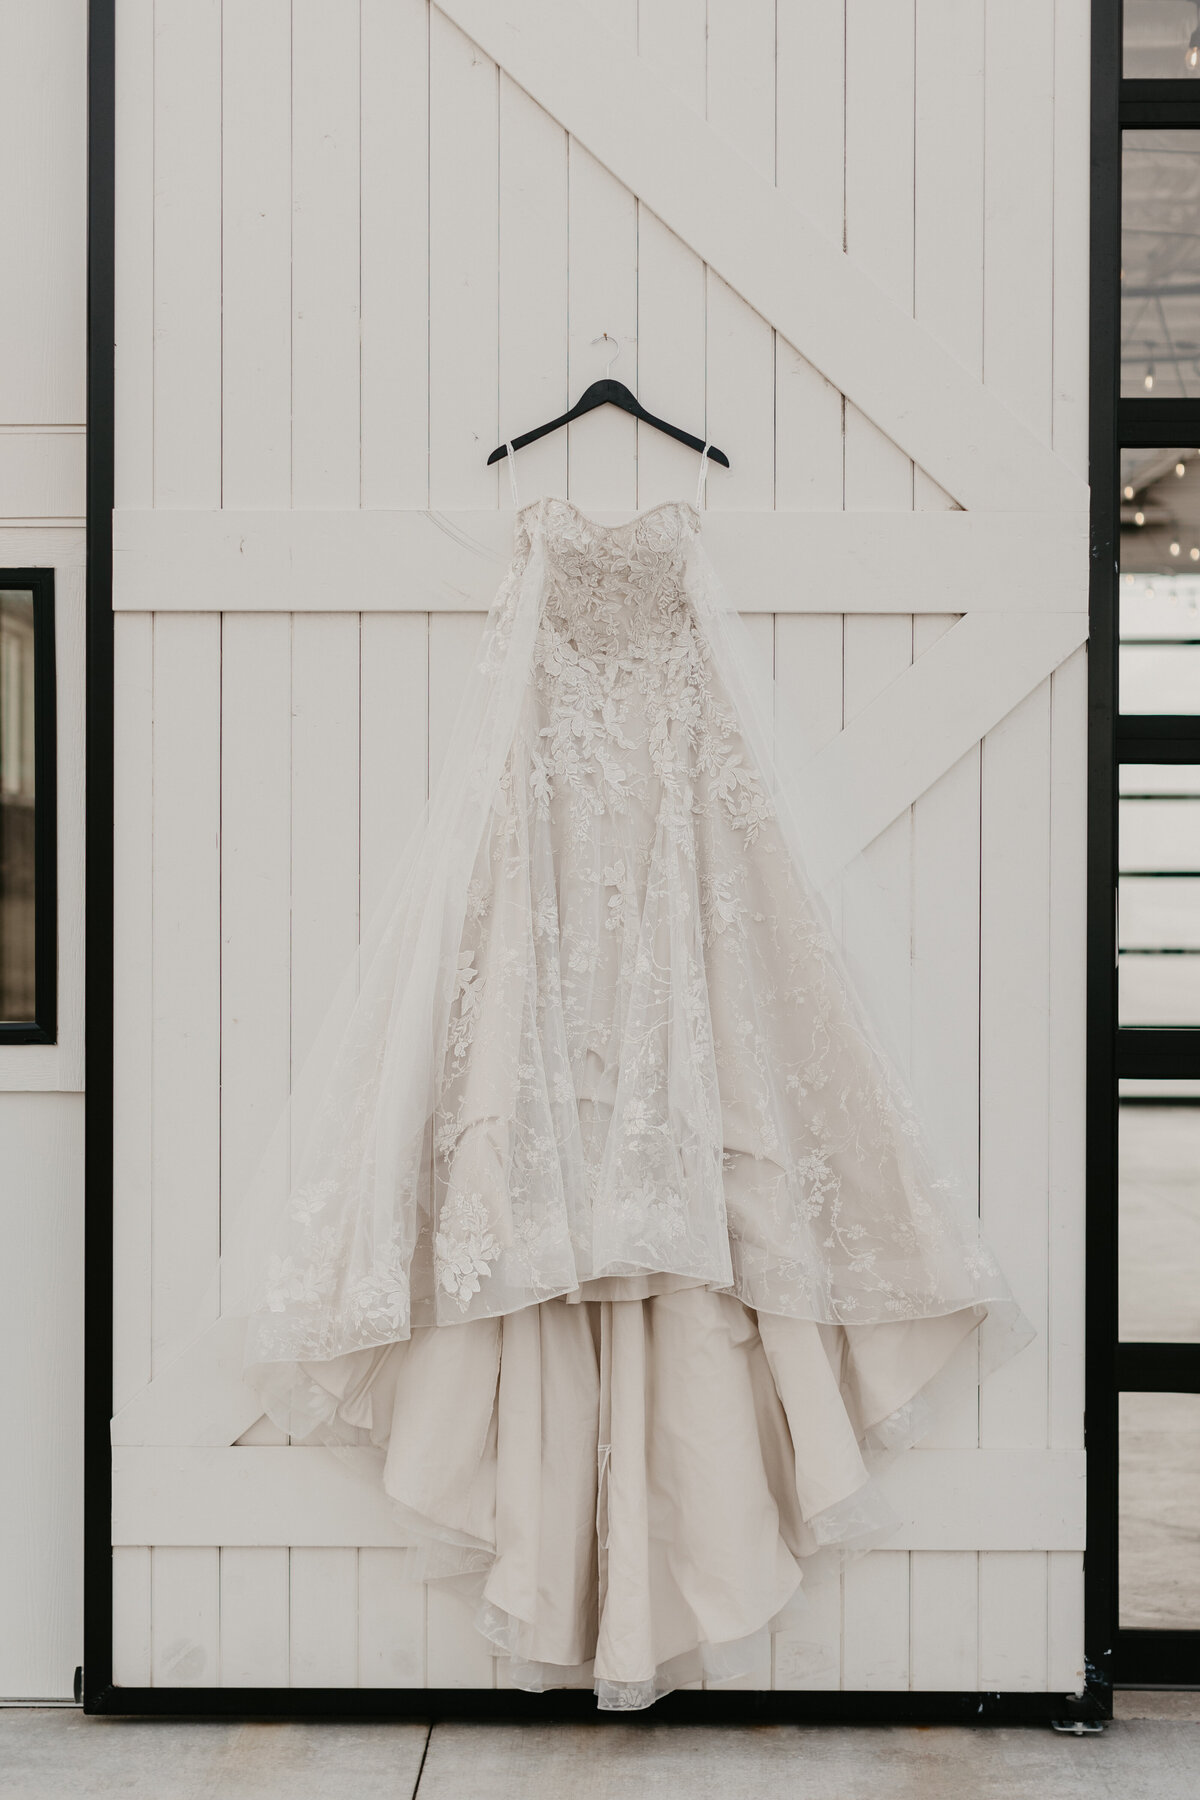 Wedding Dress Hanging on White Barn Door